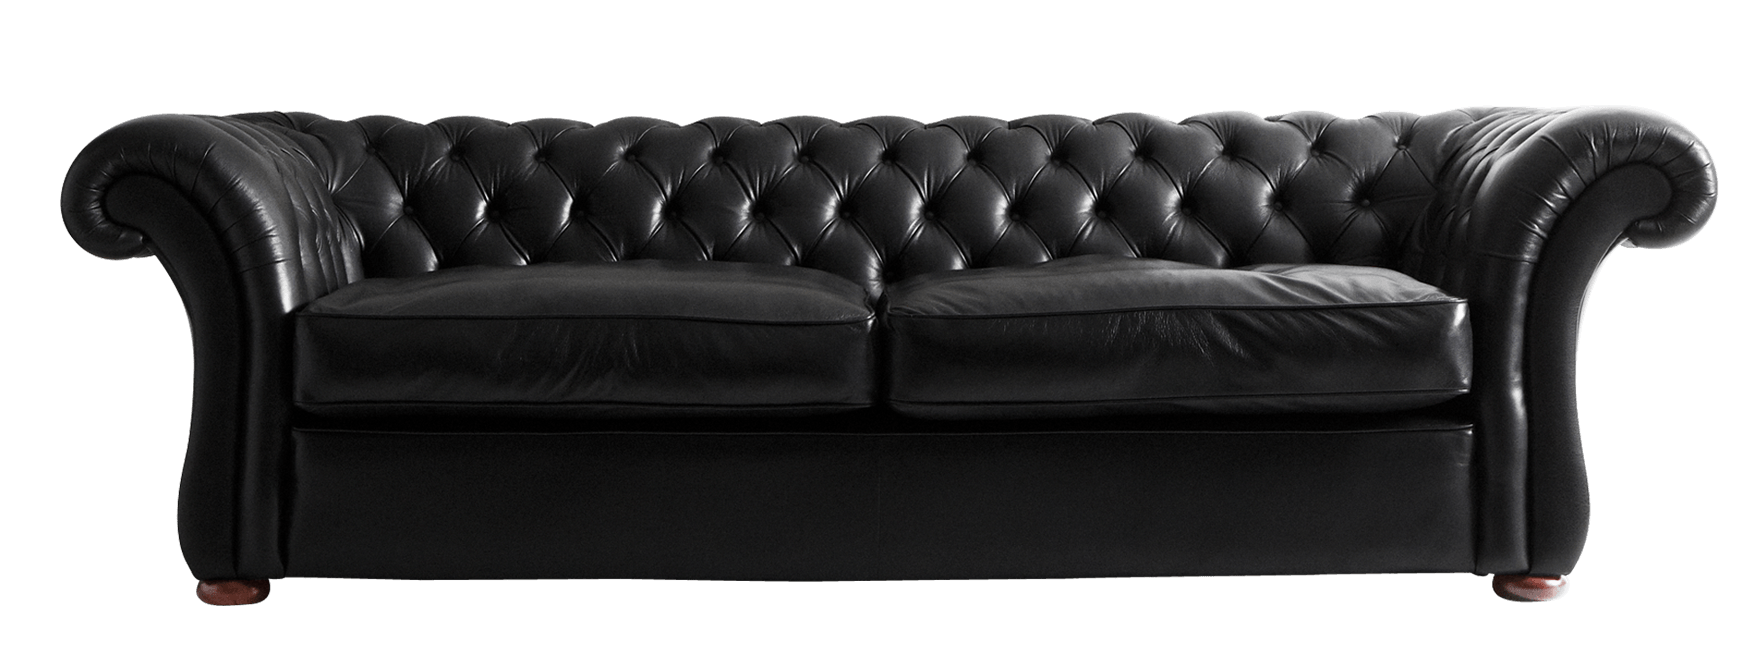 Sofa Transparent Image